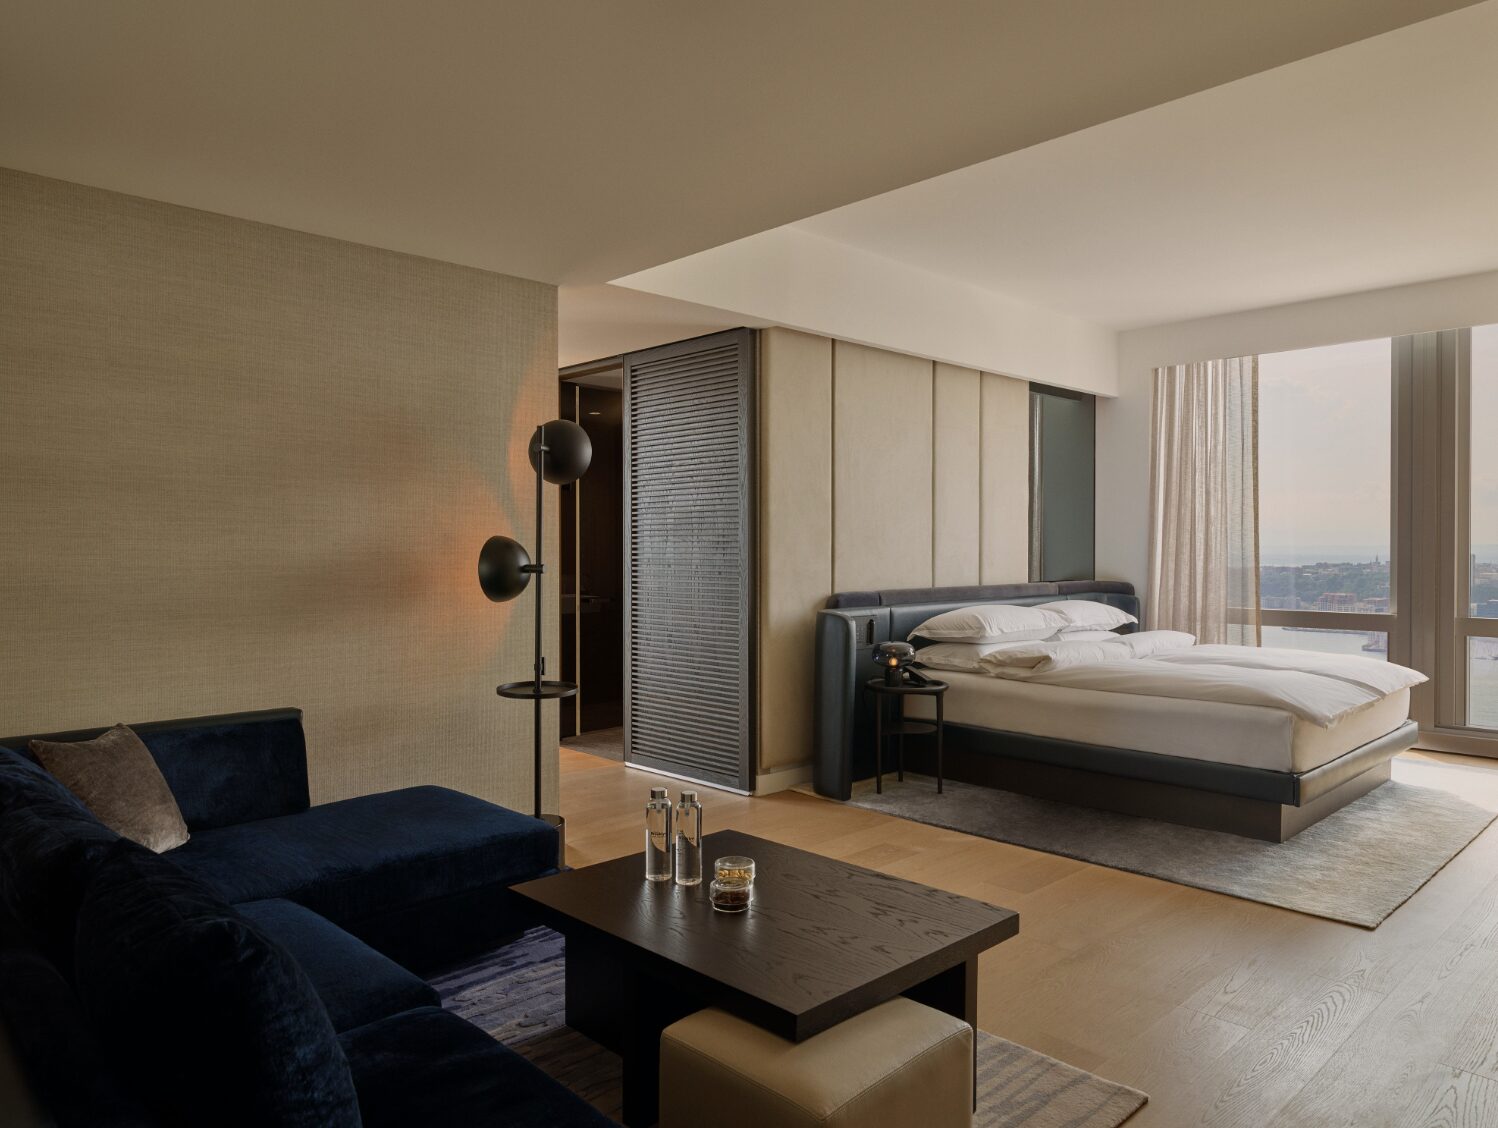 Sleep tourism | A peaceful room at Equinox Hotel New York